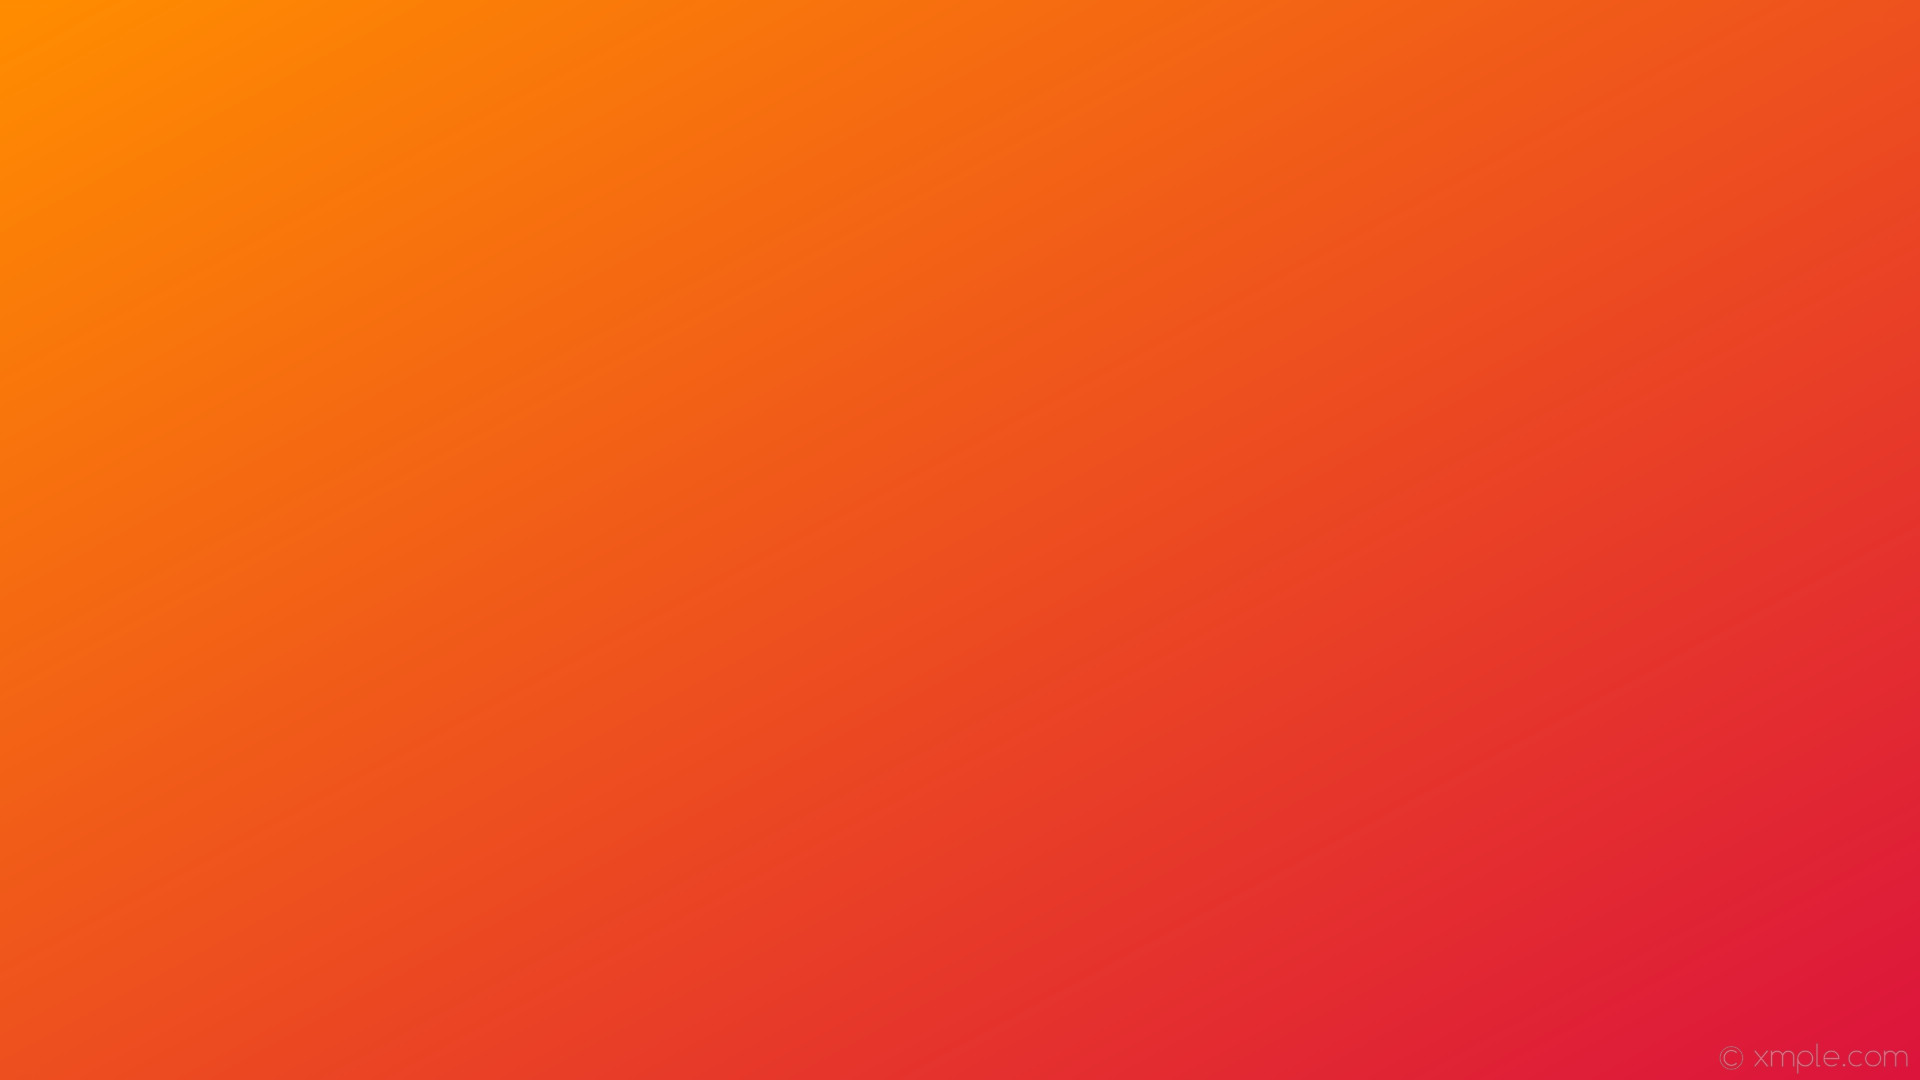 1920x1080 wallpaper orange gradient linear red dark orange crimson #ff8c00 #dc143c  150Â°